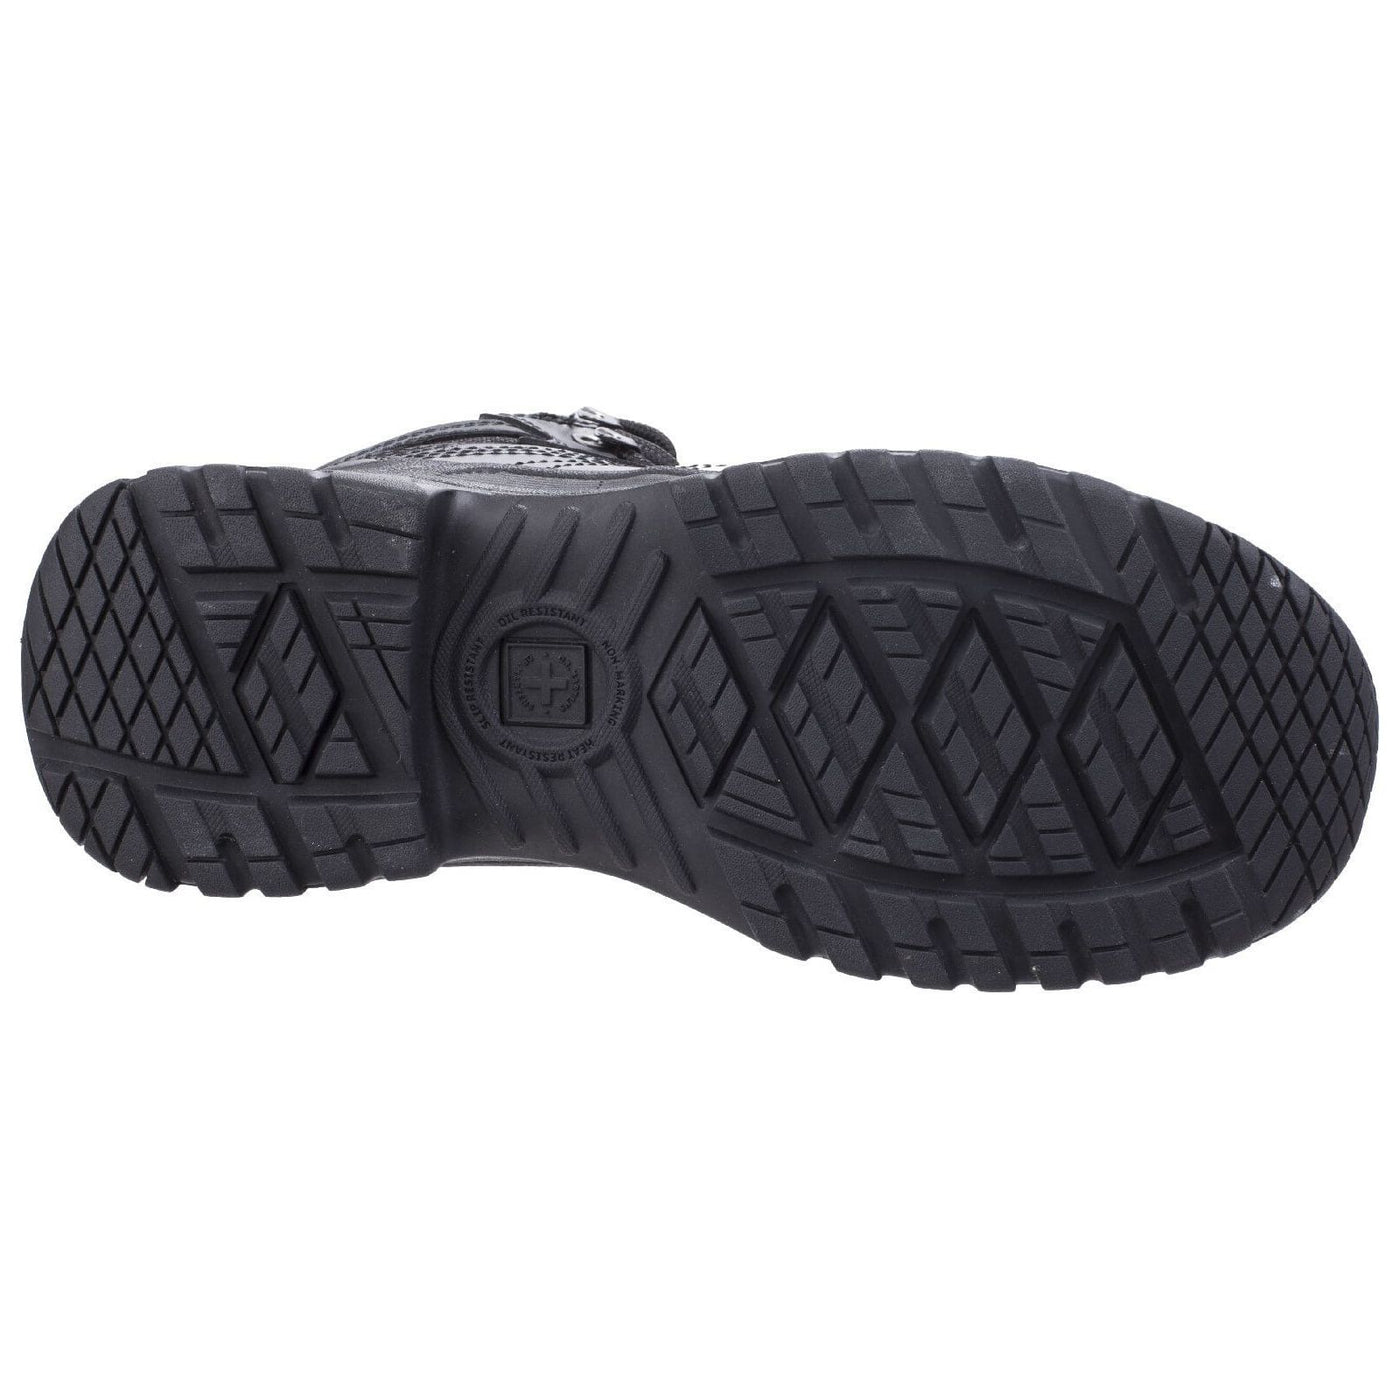 Dr Martens Torness Safety Boots-Black-3